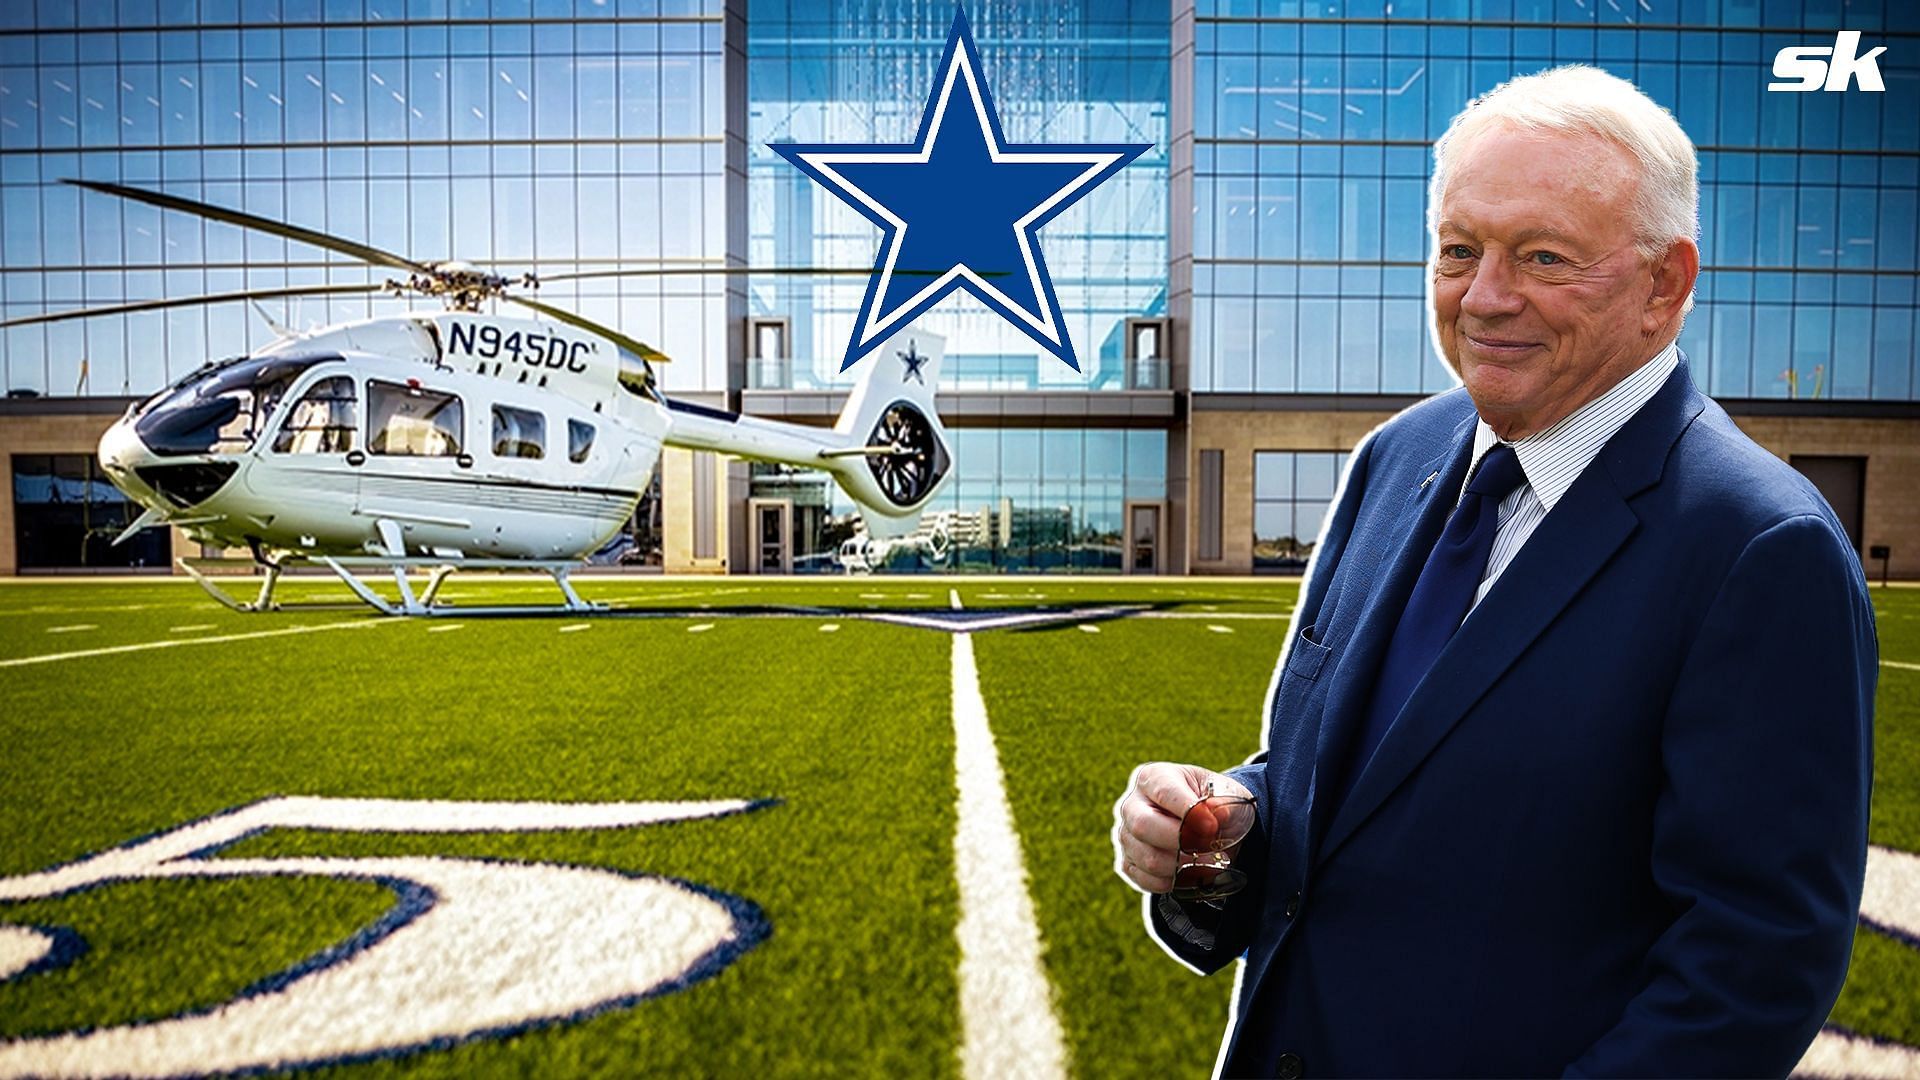 When Cowboys owner Jerry Jones unveiled $9M custom Airbus chopper